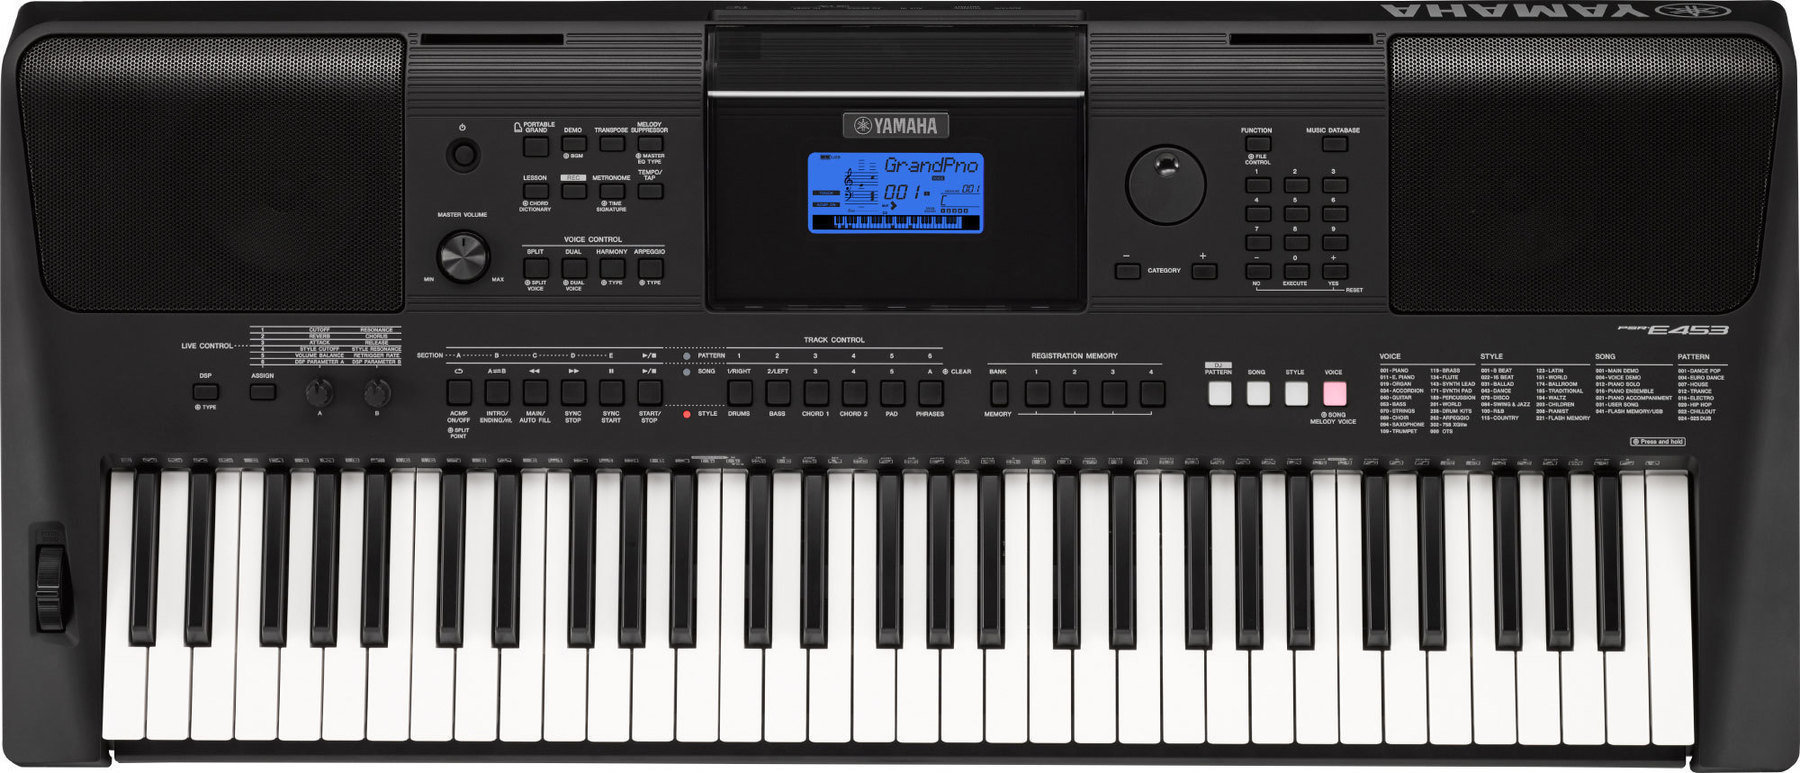 Keyboard with Touch Response Yamaha PSR-E453